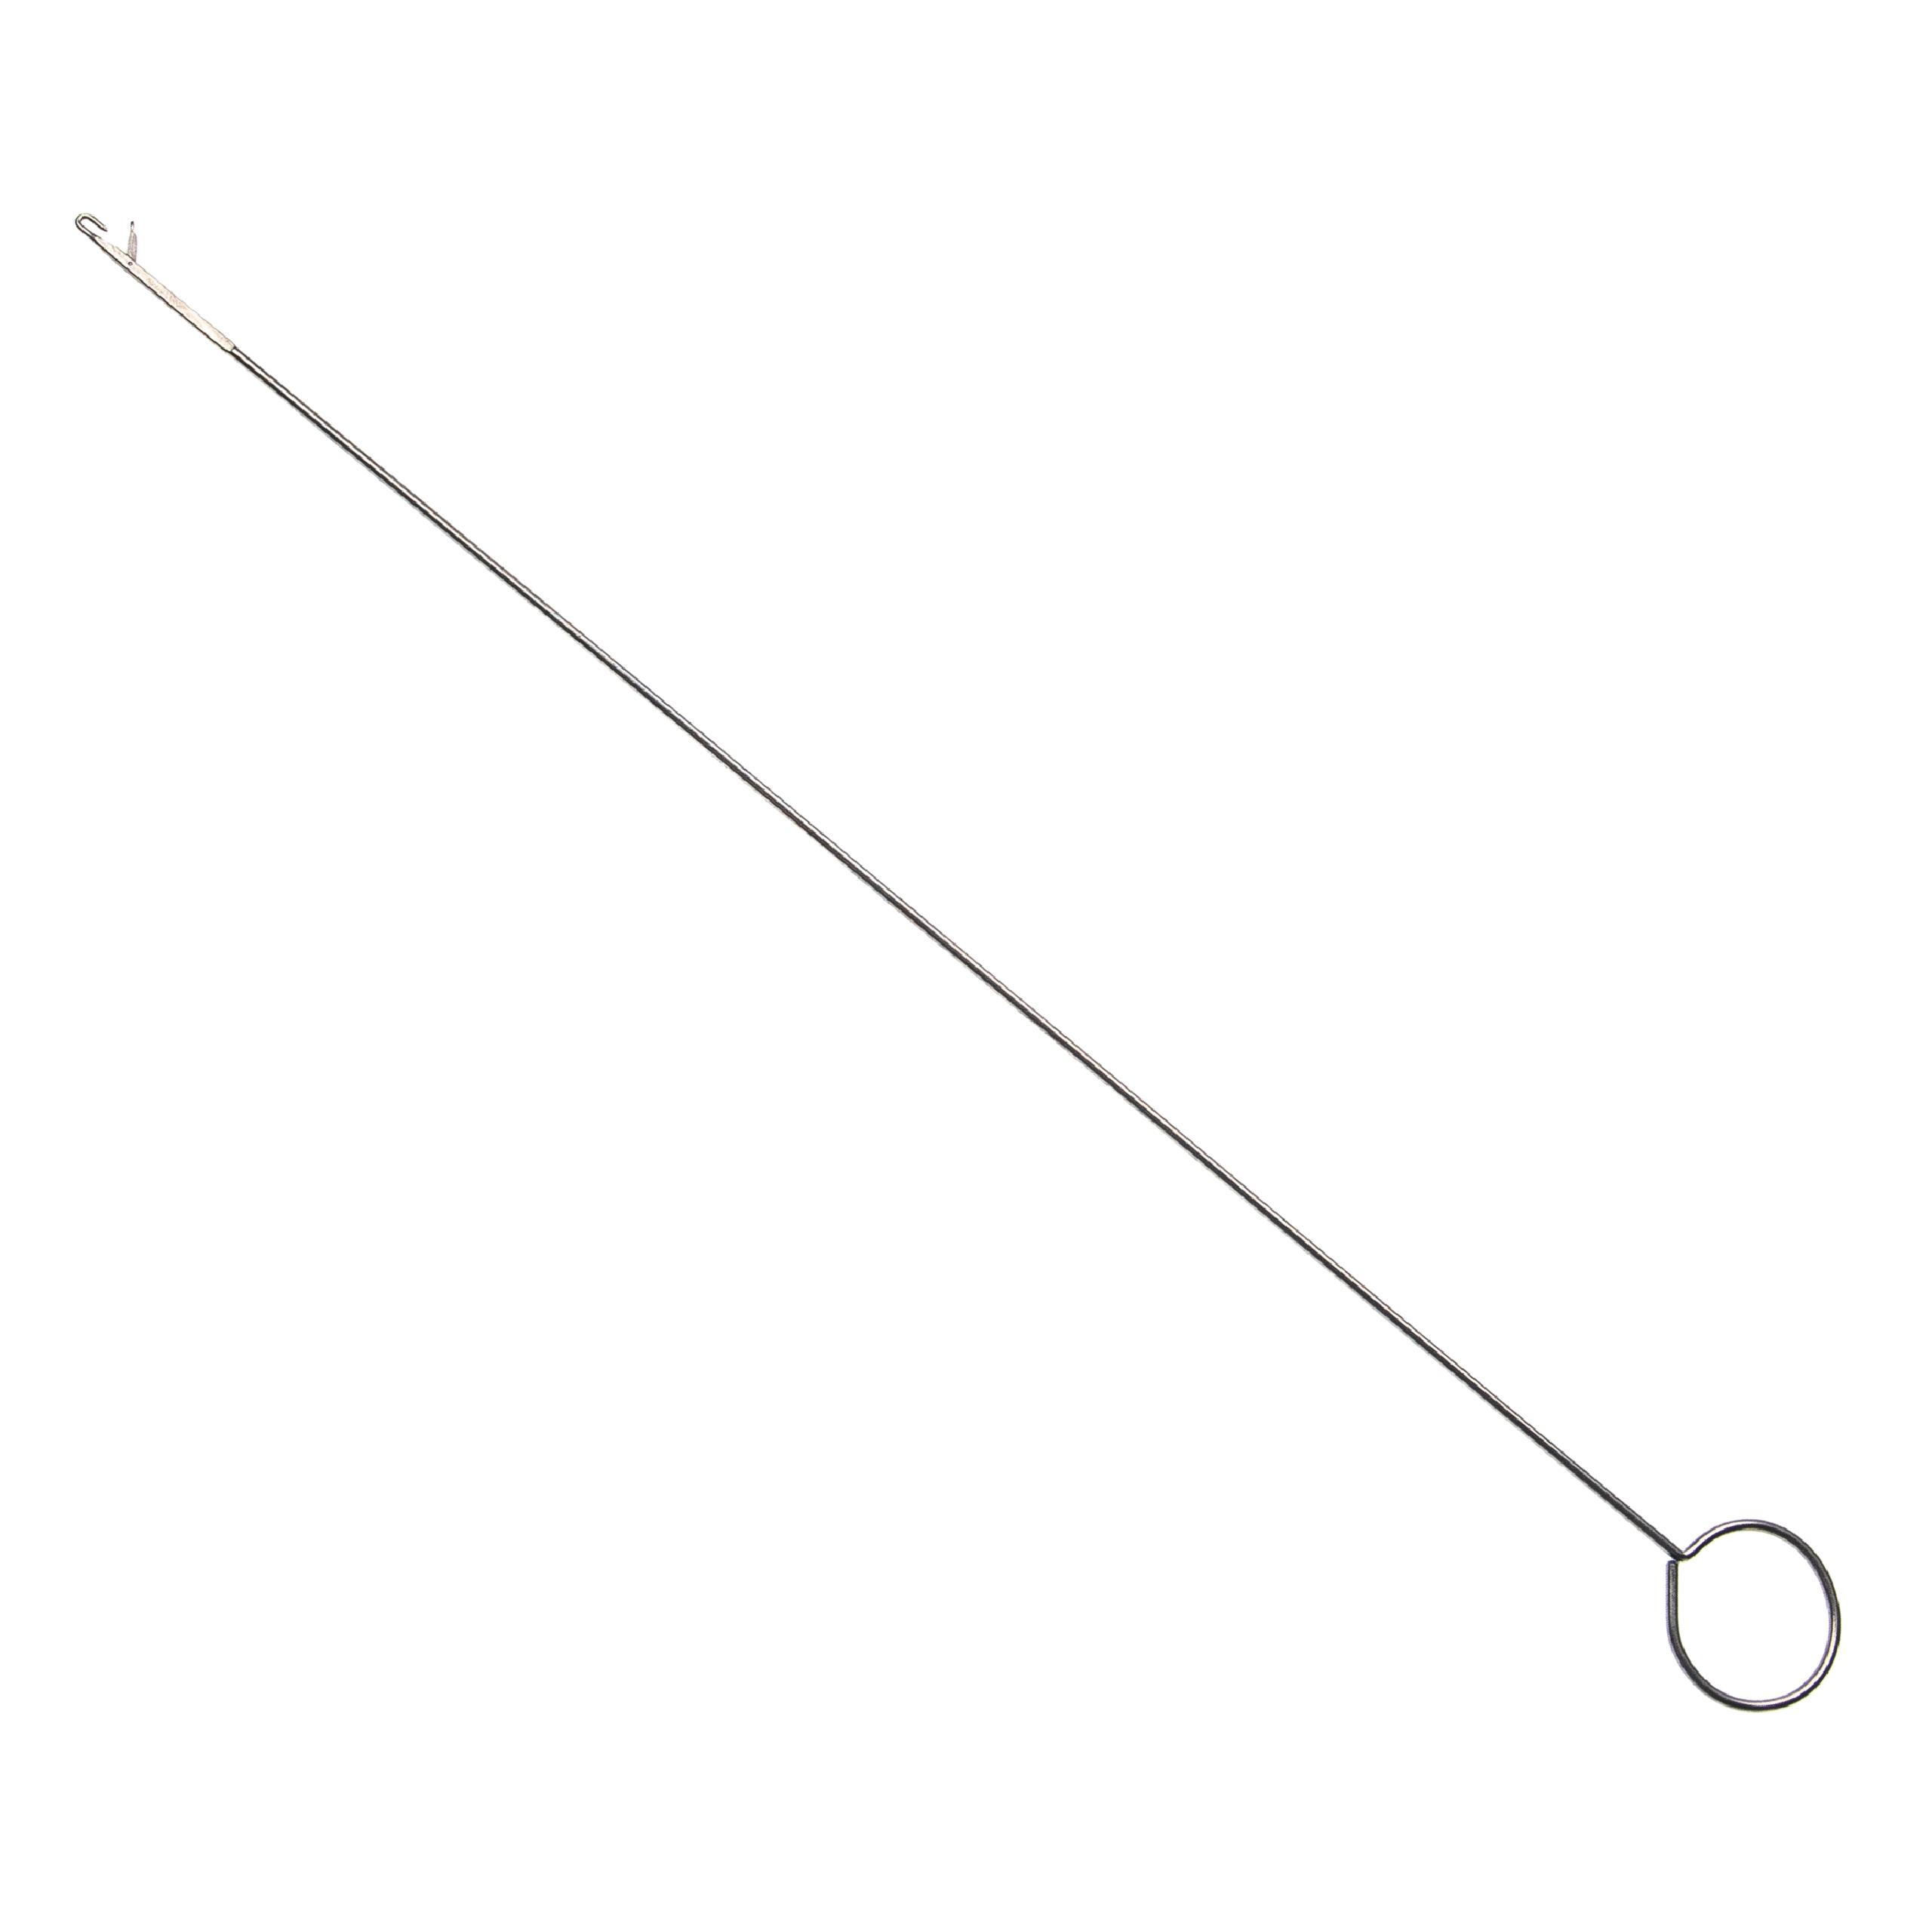 vhbw Turning Needle with Hook - Extra Long Pull-Through Needle (26.5 cm), Metal